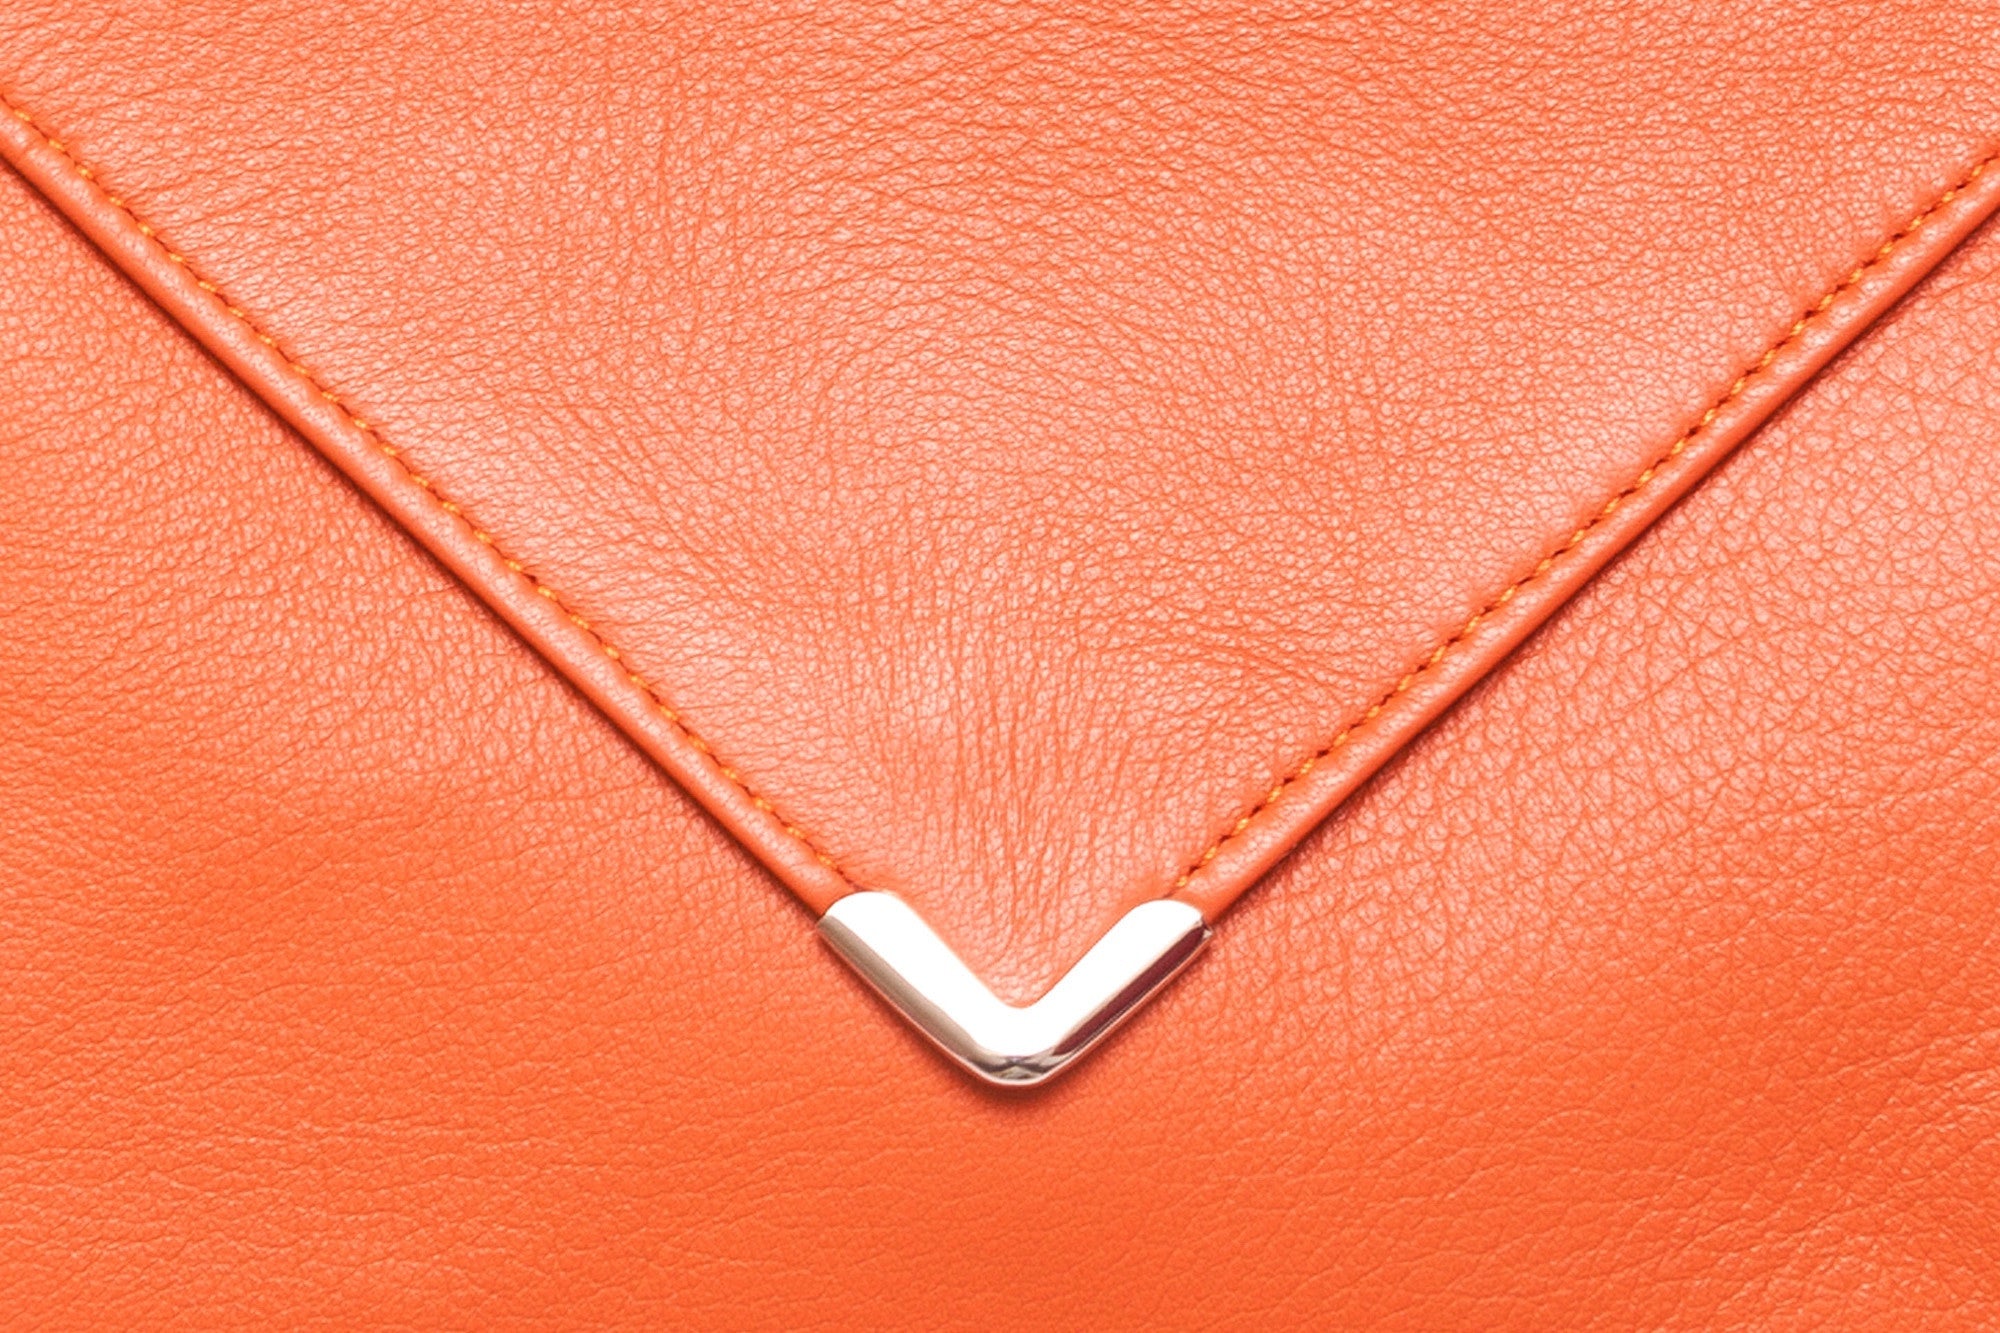 Orange Leather Clutch Bag